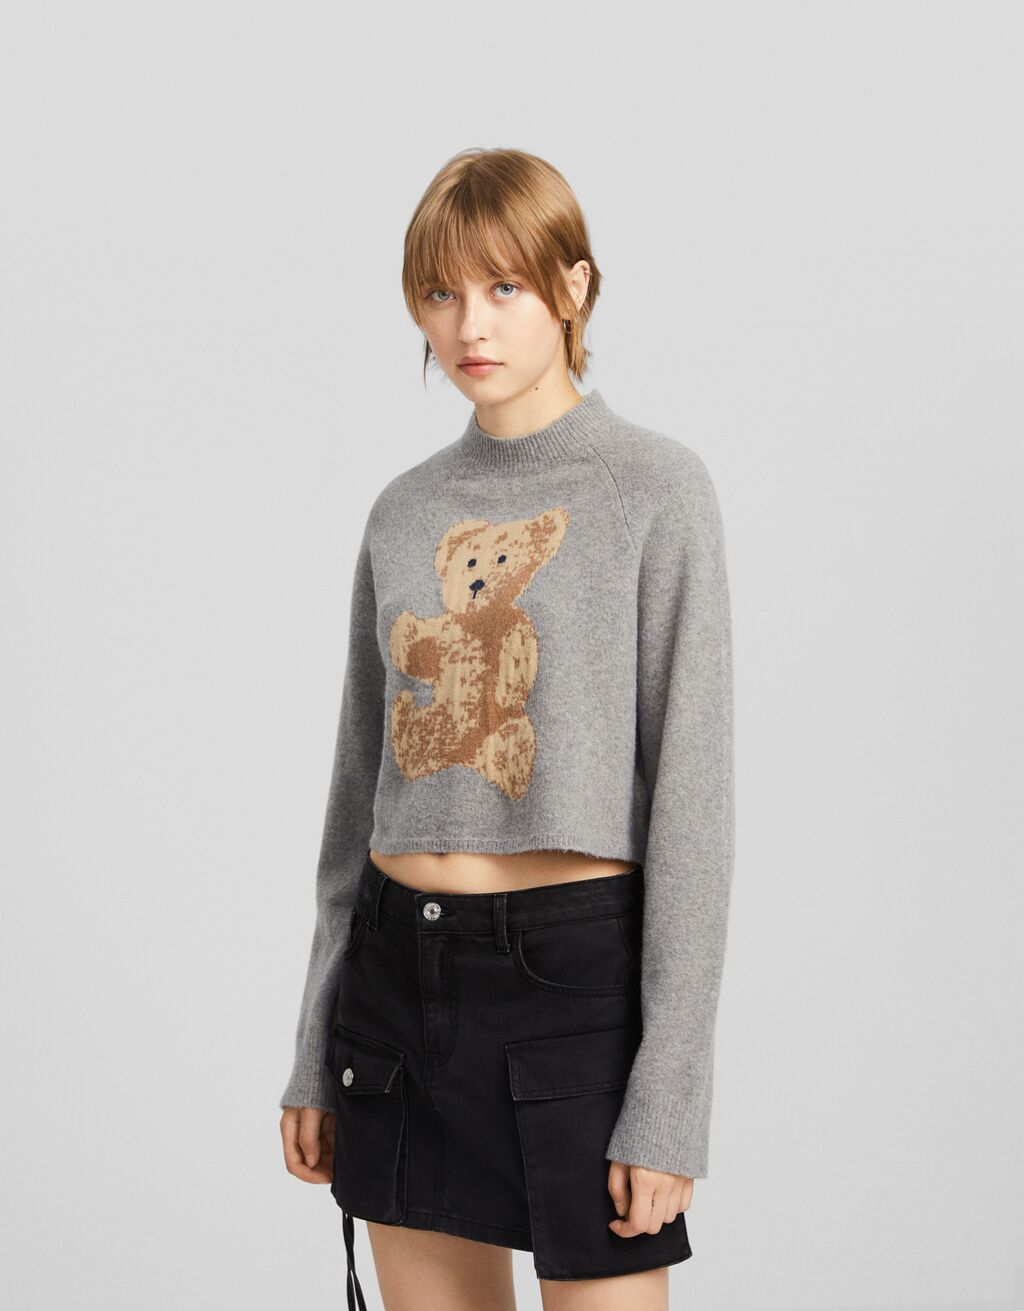 Bear sweater